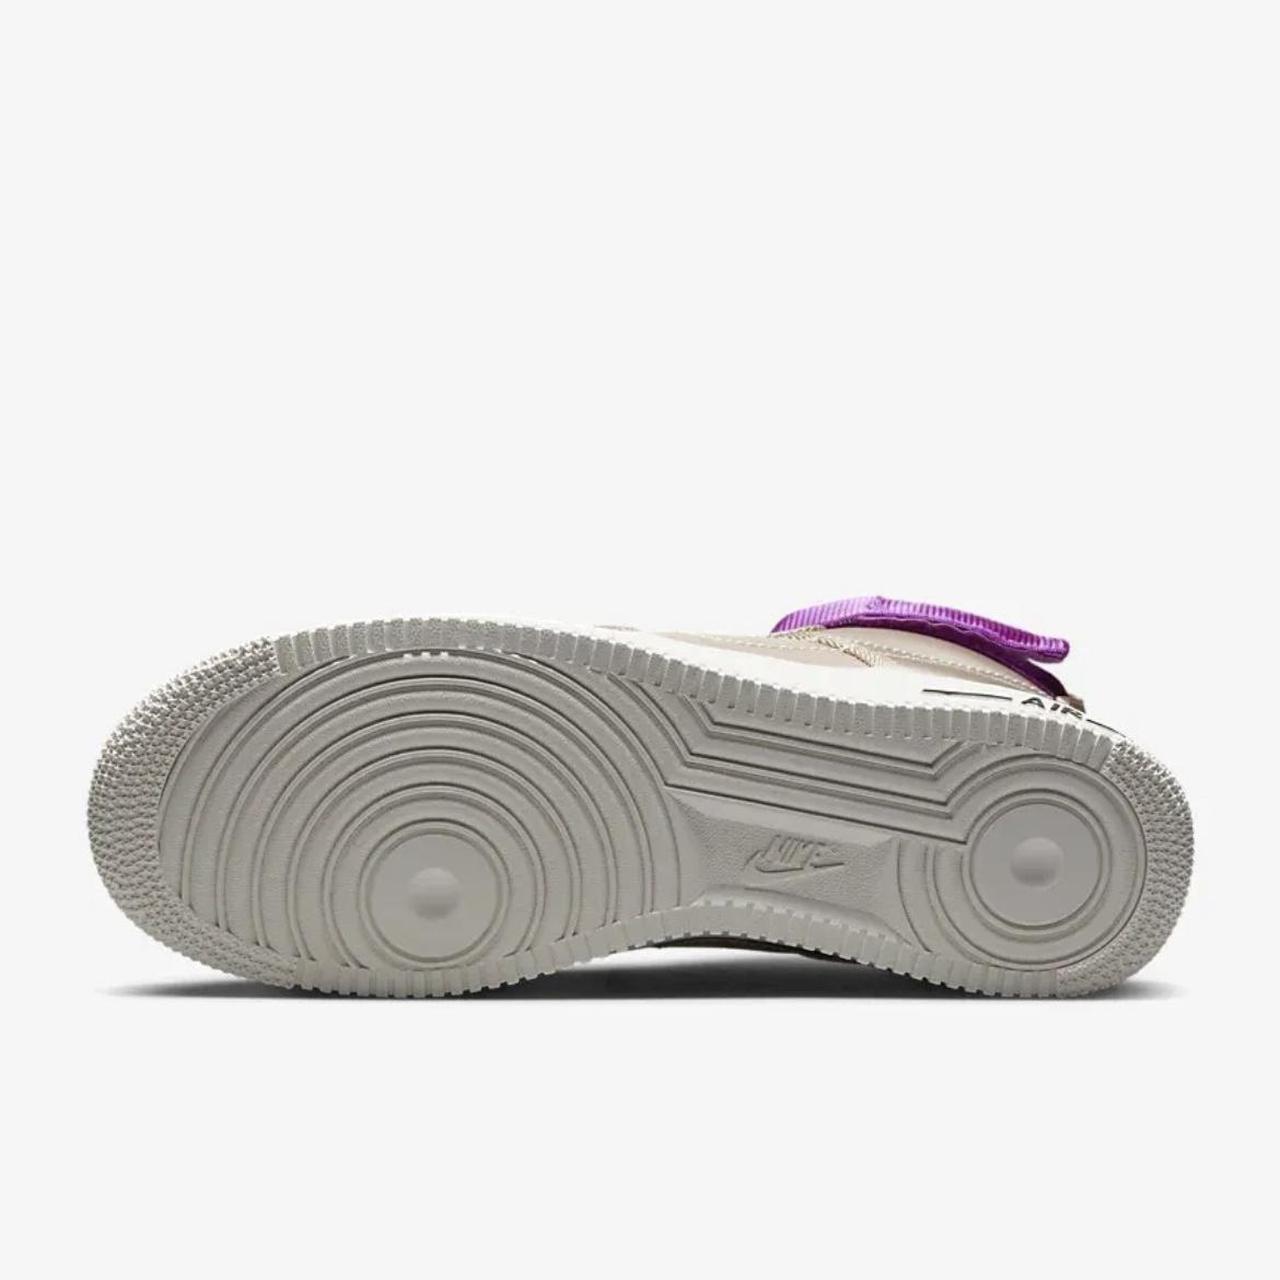 Nike Air Force 1 High '07 LV8 Shoes Tan Purple White - Depop